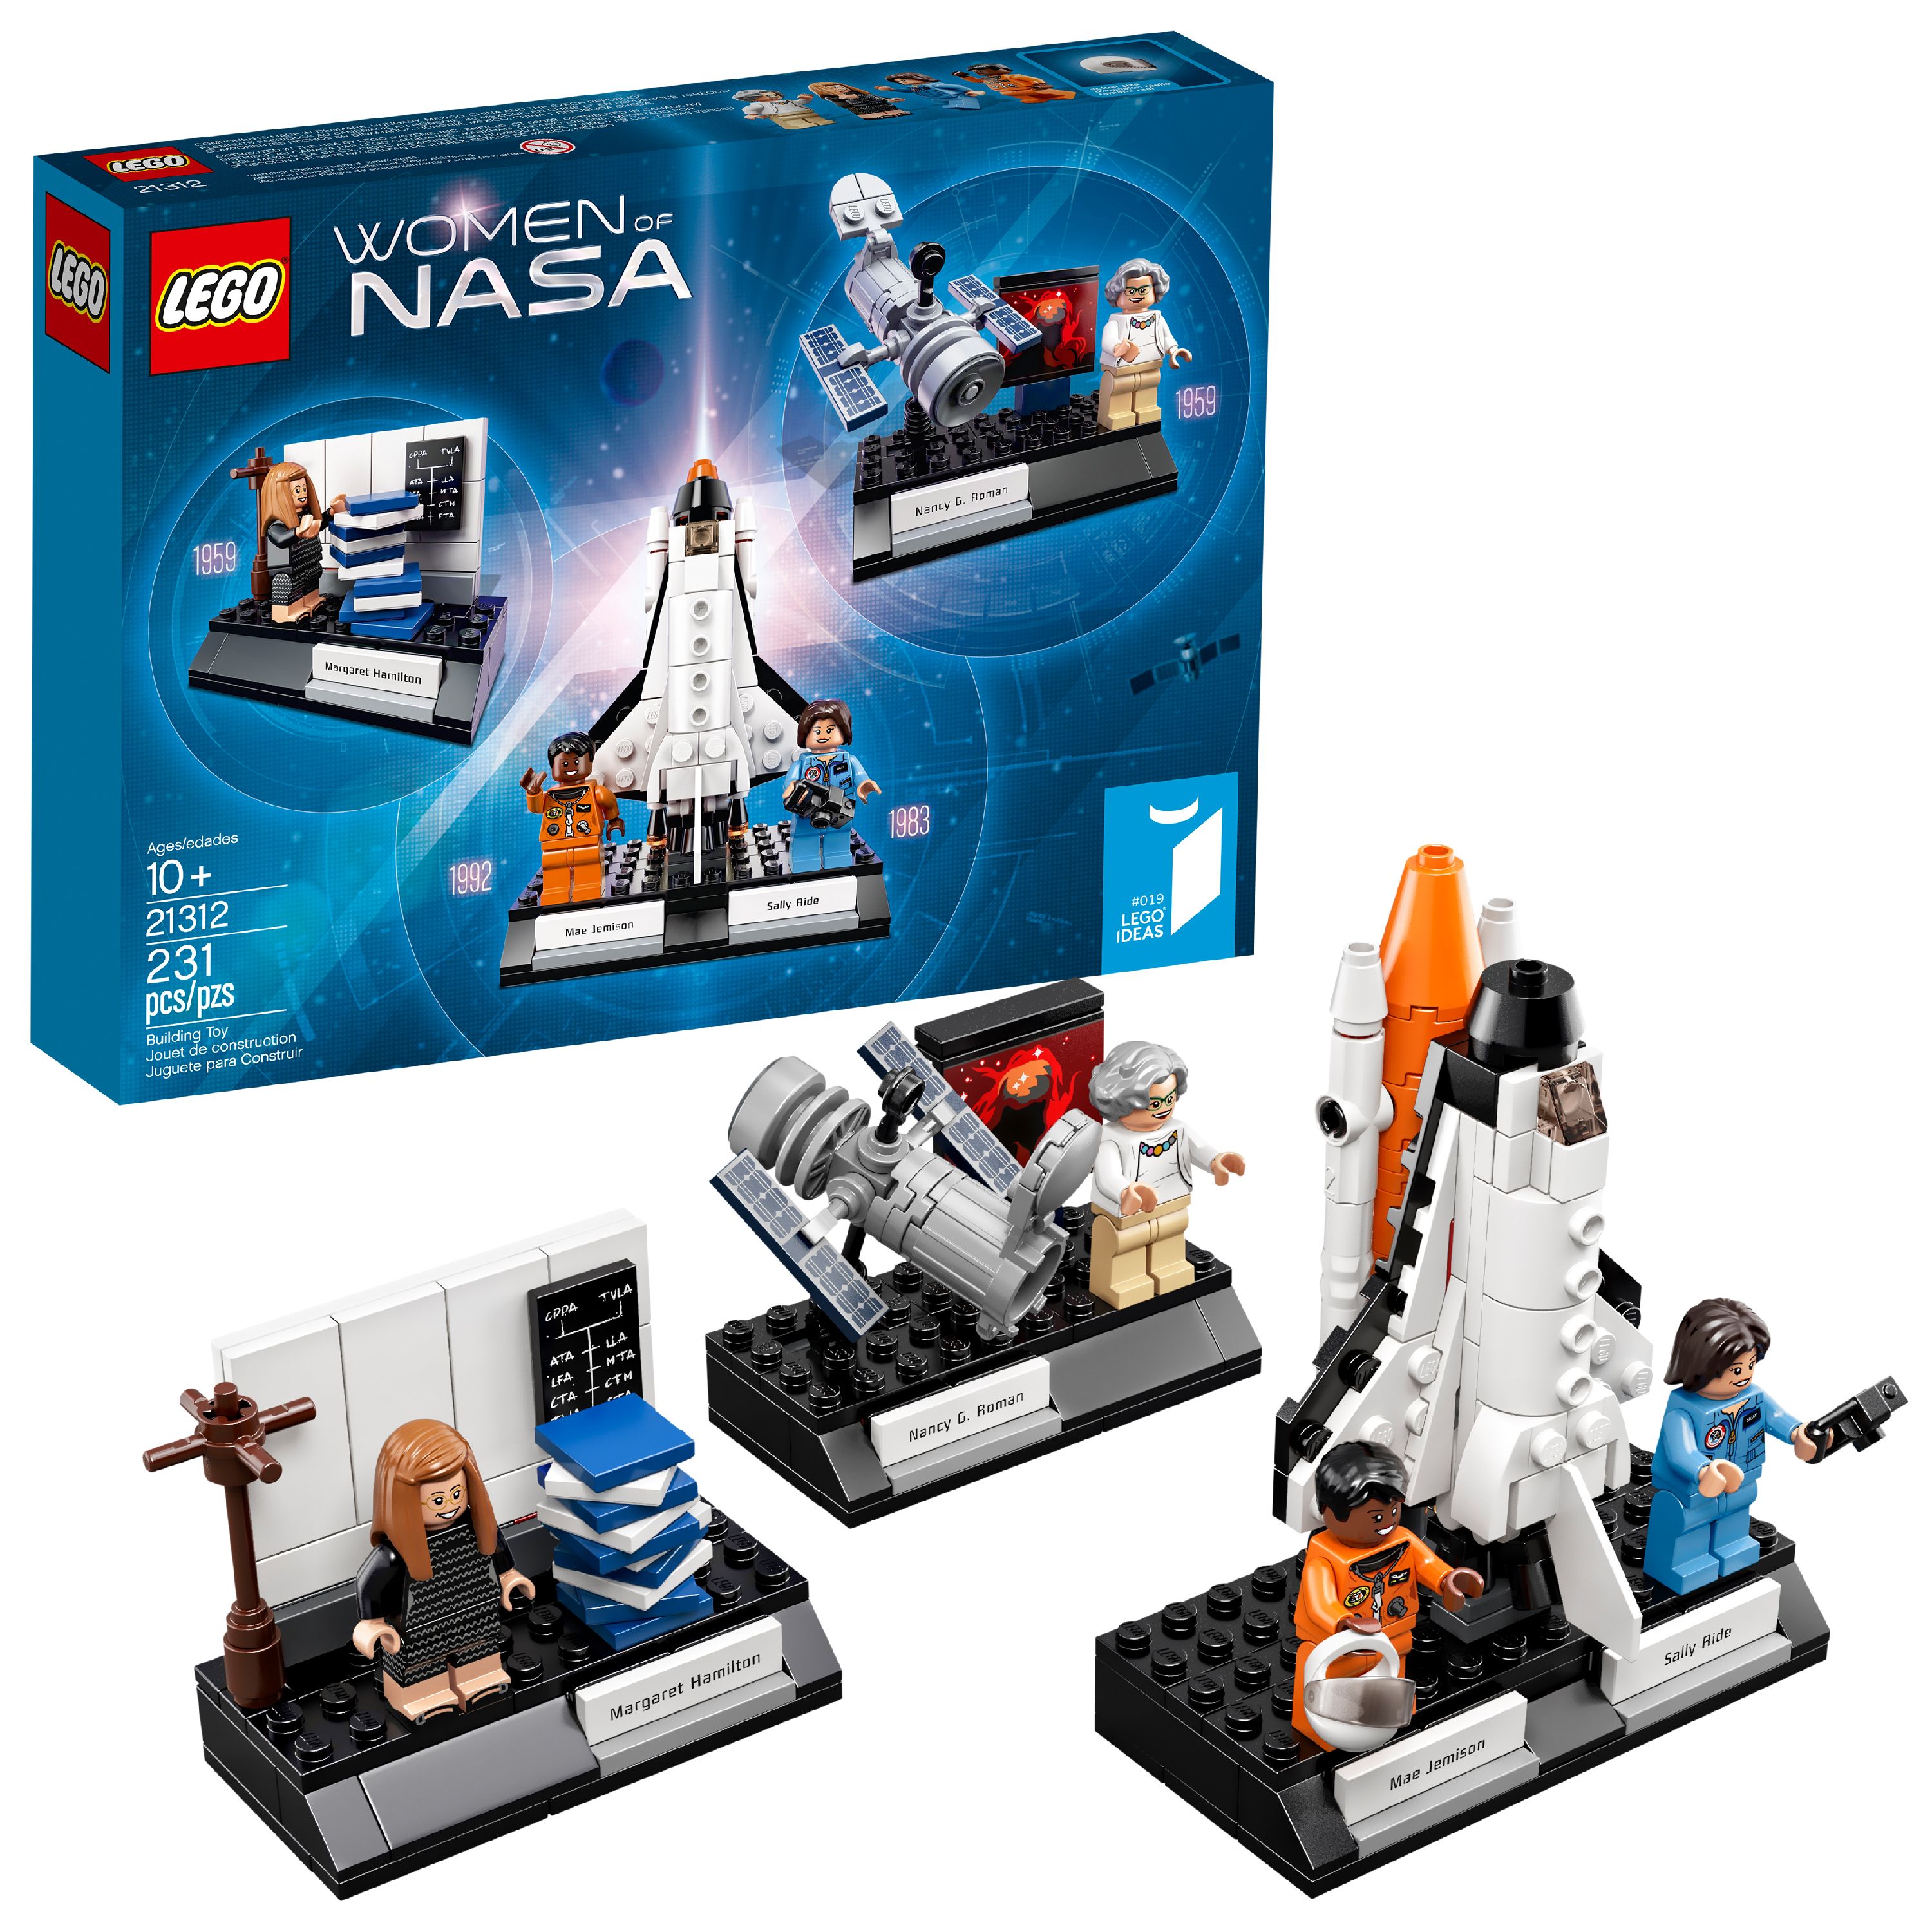 LEGO Ideas Women of NASA Building Set 21312 (231 Pieces) - image 1 of 6